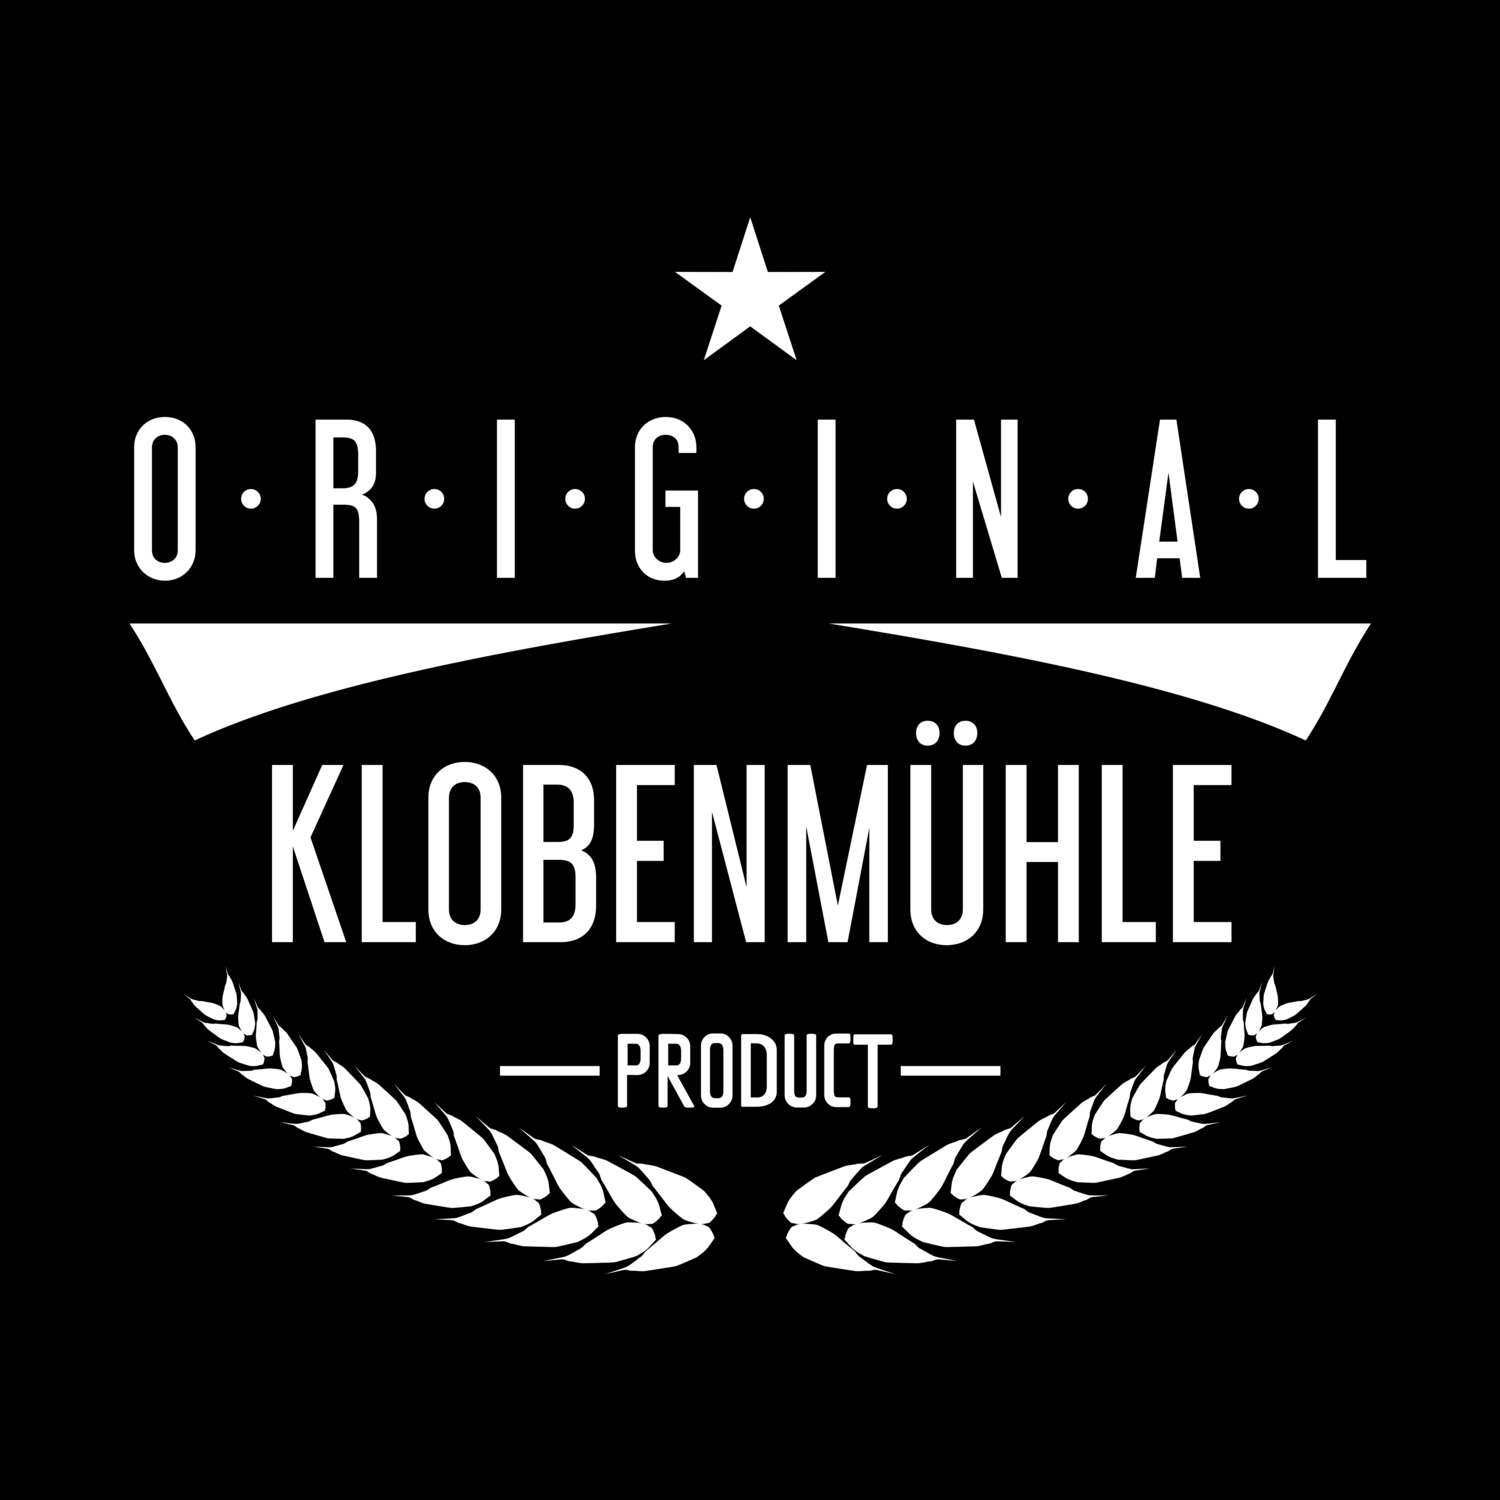 Klobenmühle T-Shirt »Original Product«